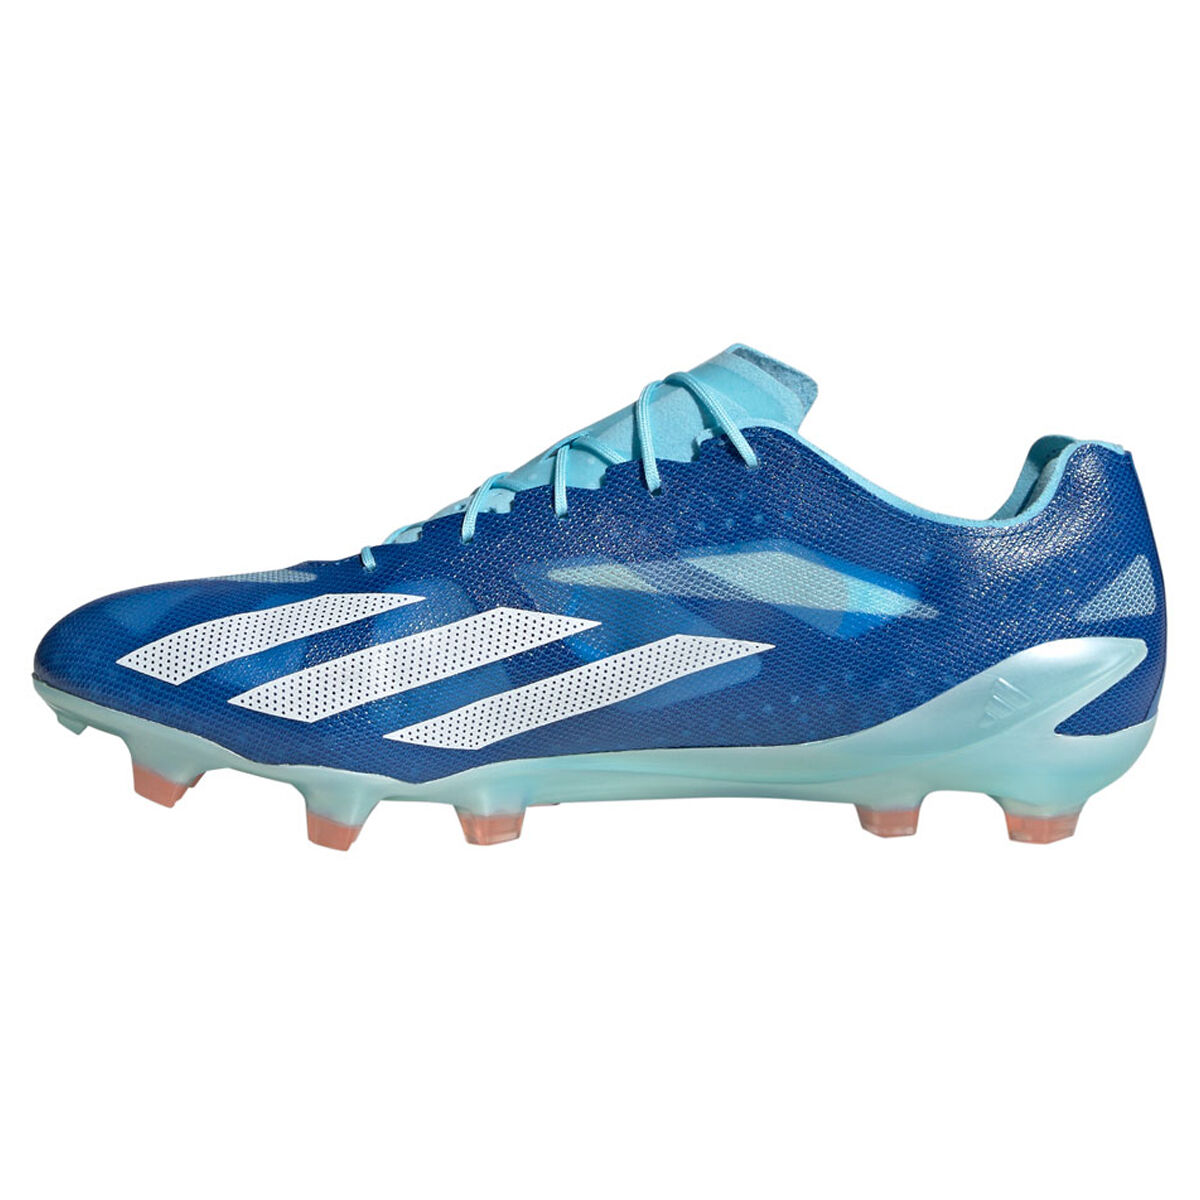 adidas Men's Football Boots - Predator, Copa & more - rebel